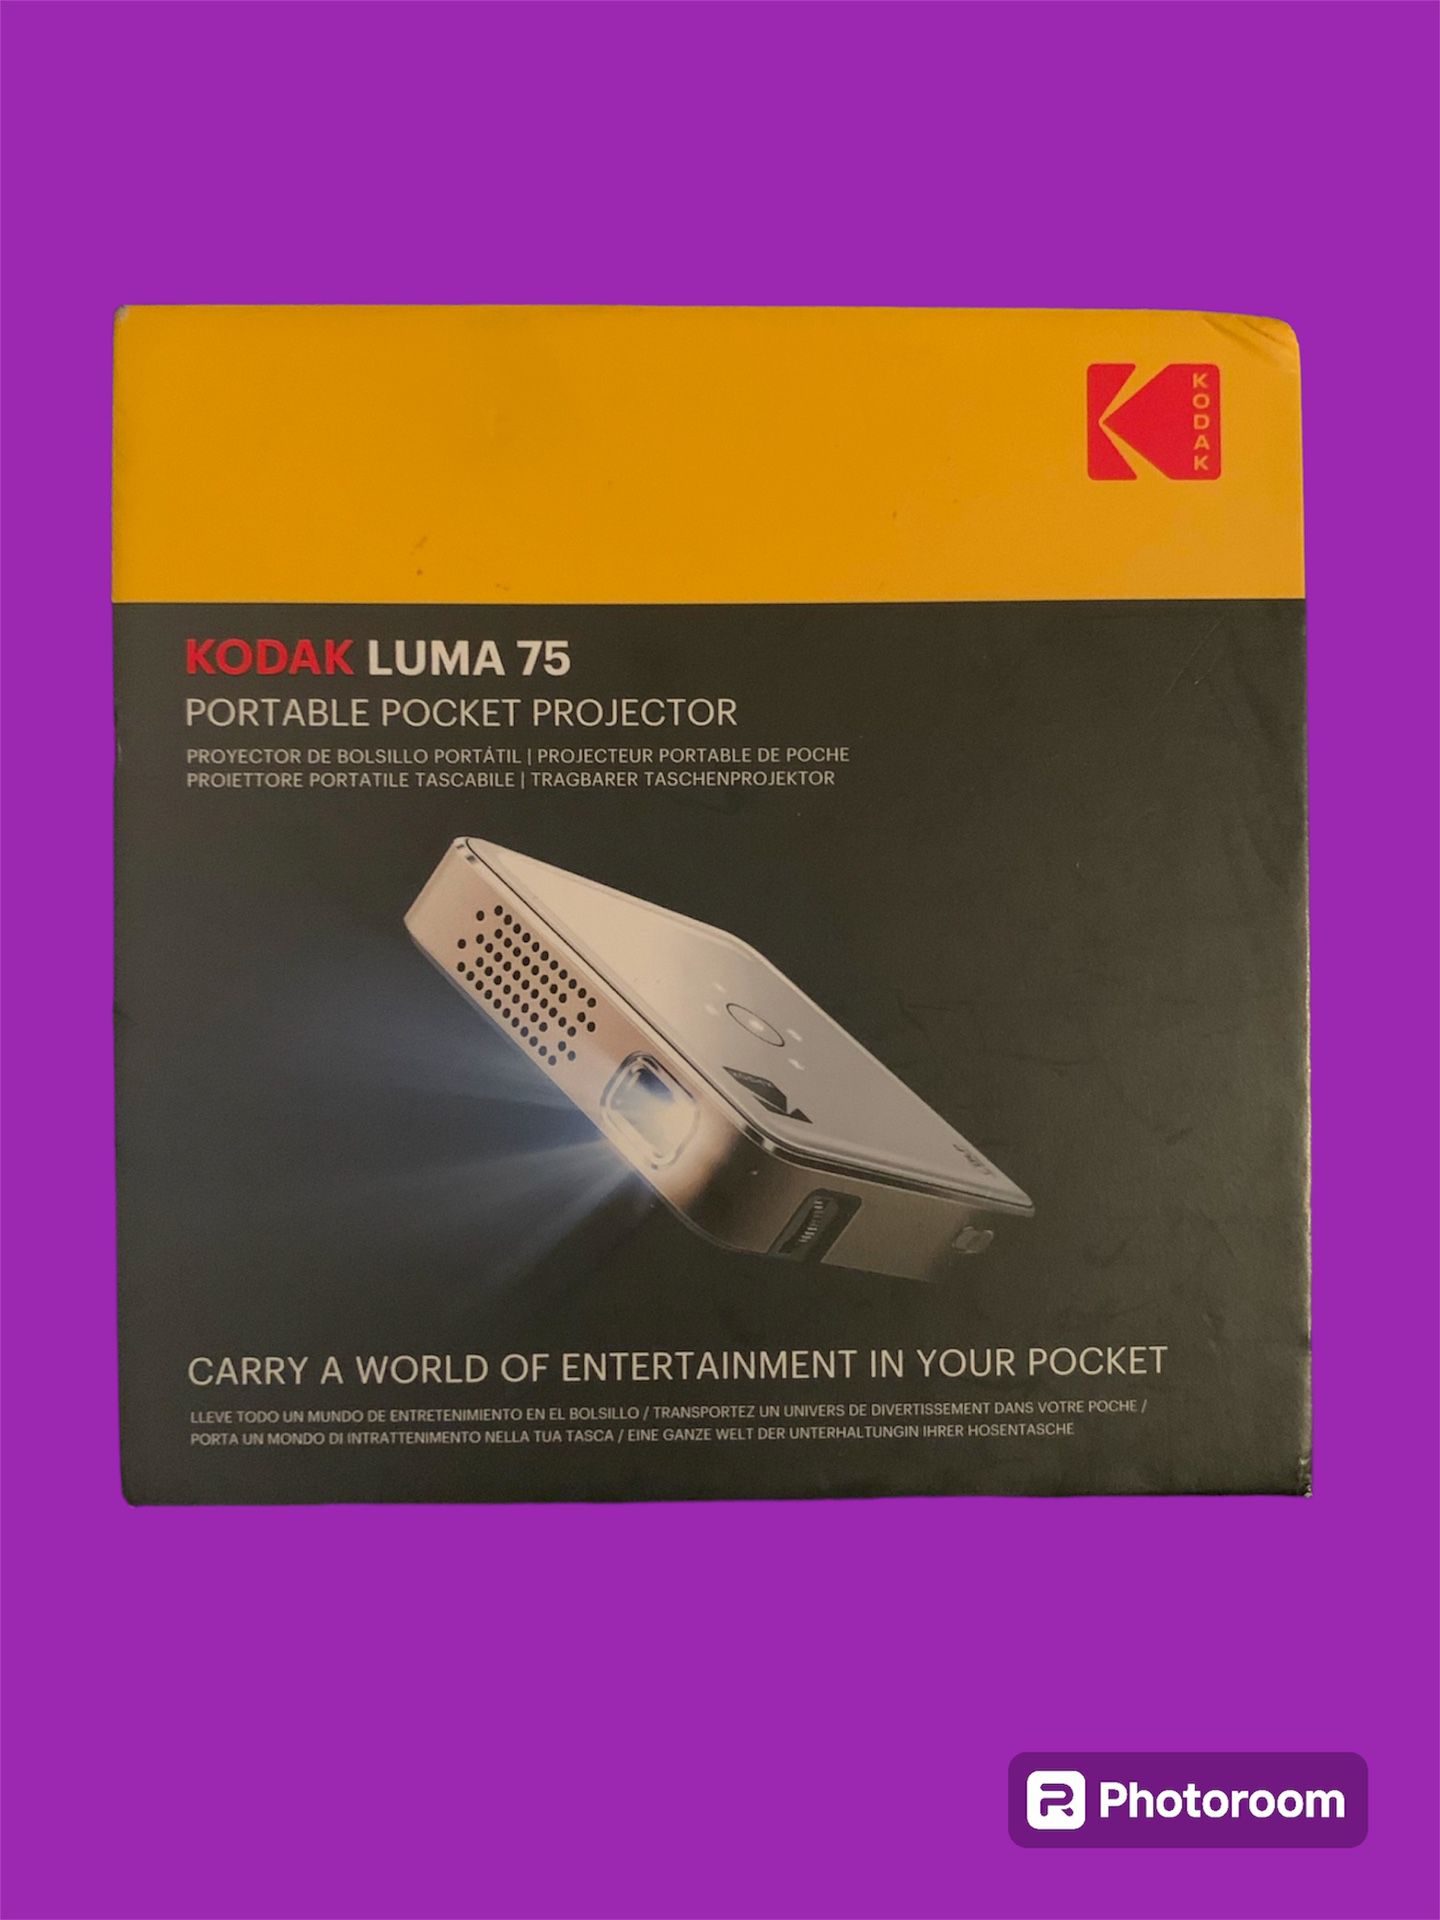 Kodak Luma 75 Portable Pocket Projector Perfect New Conditions $120